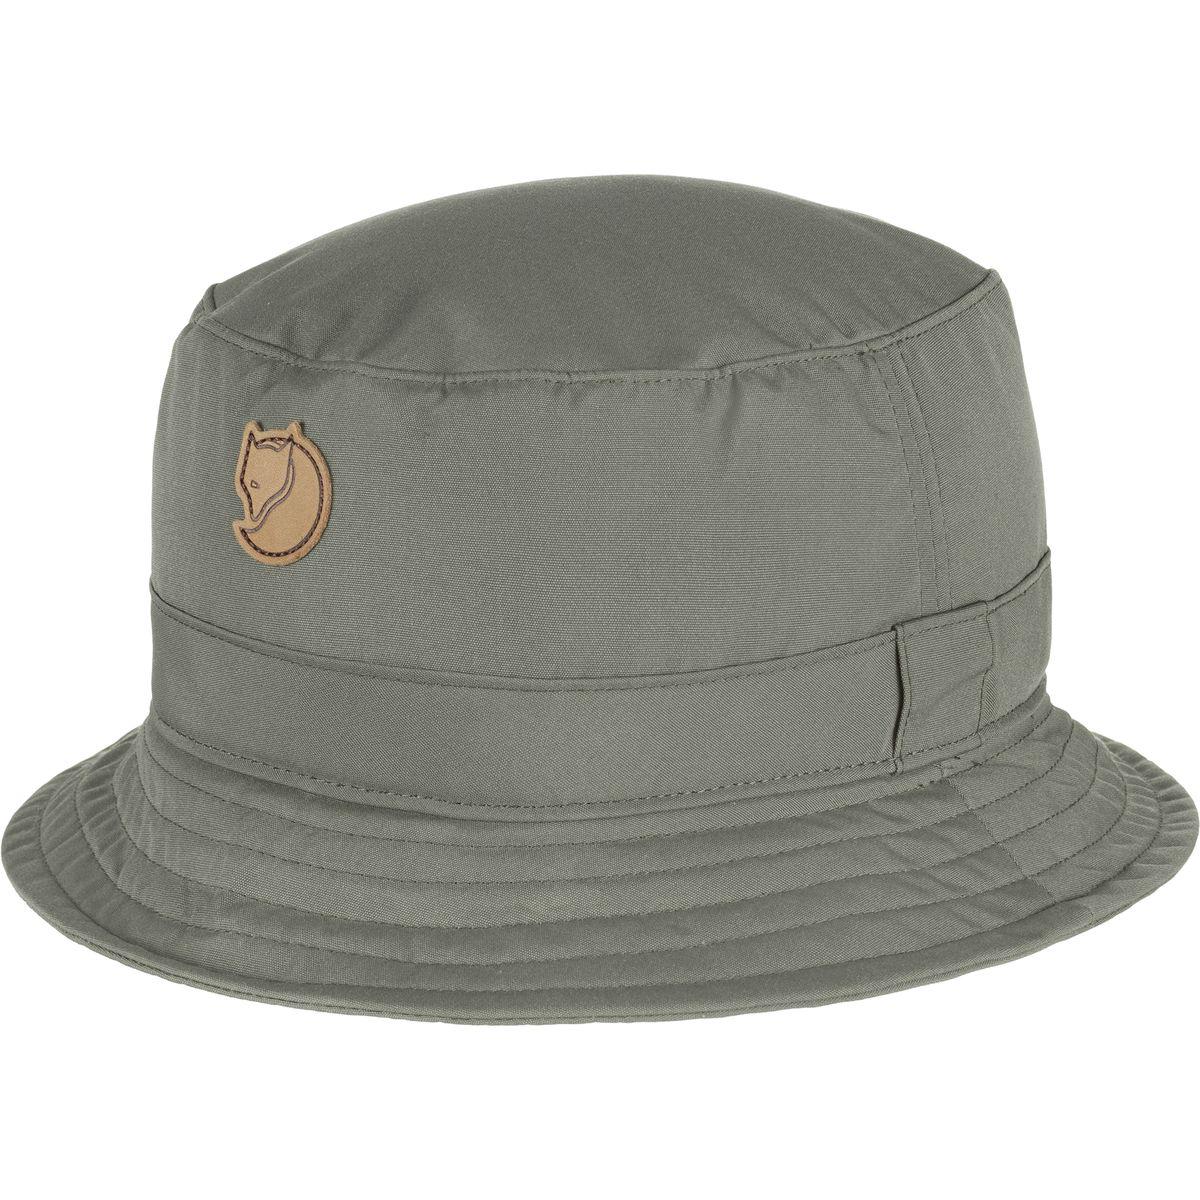 Fjallraven Synthetic Kiruna Hat in Gray for Men - Lyst